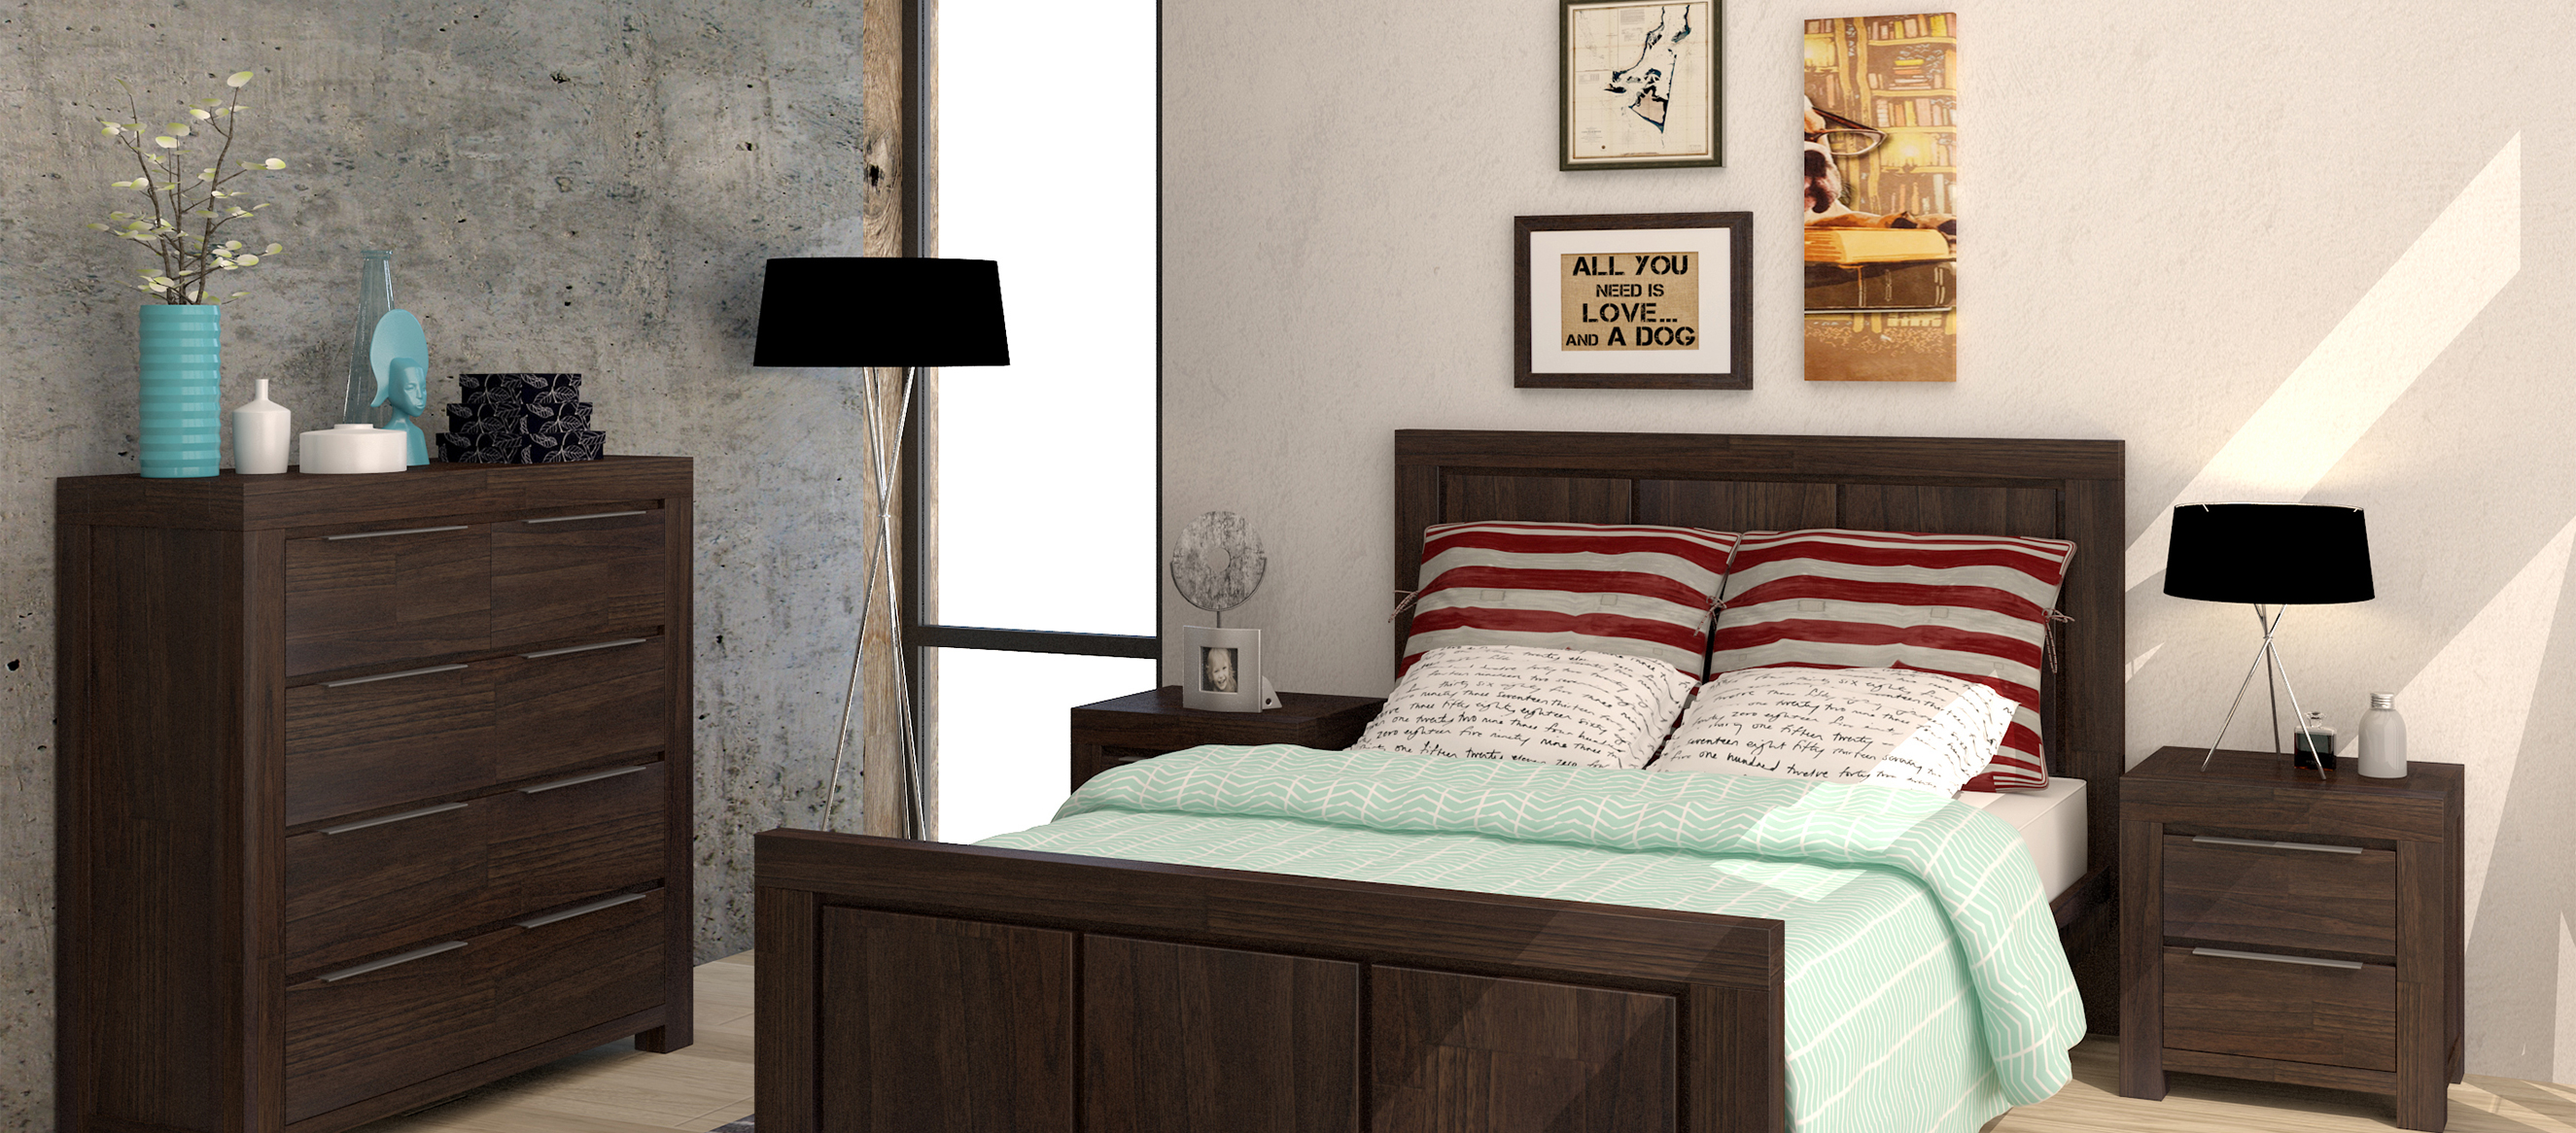 Cabanas Range Bedroom furniture